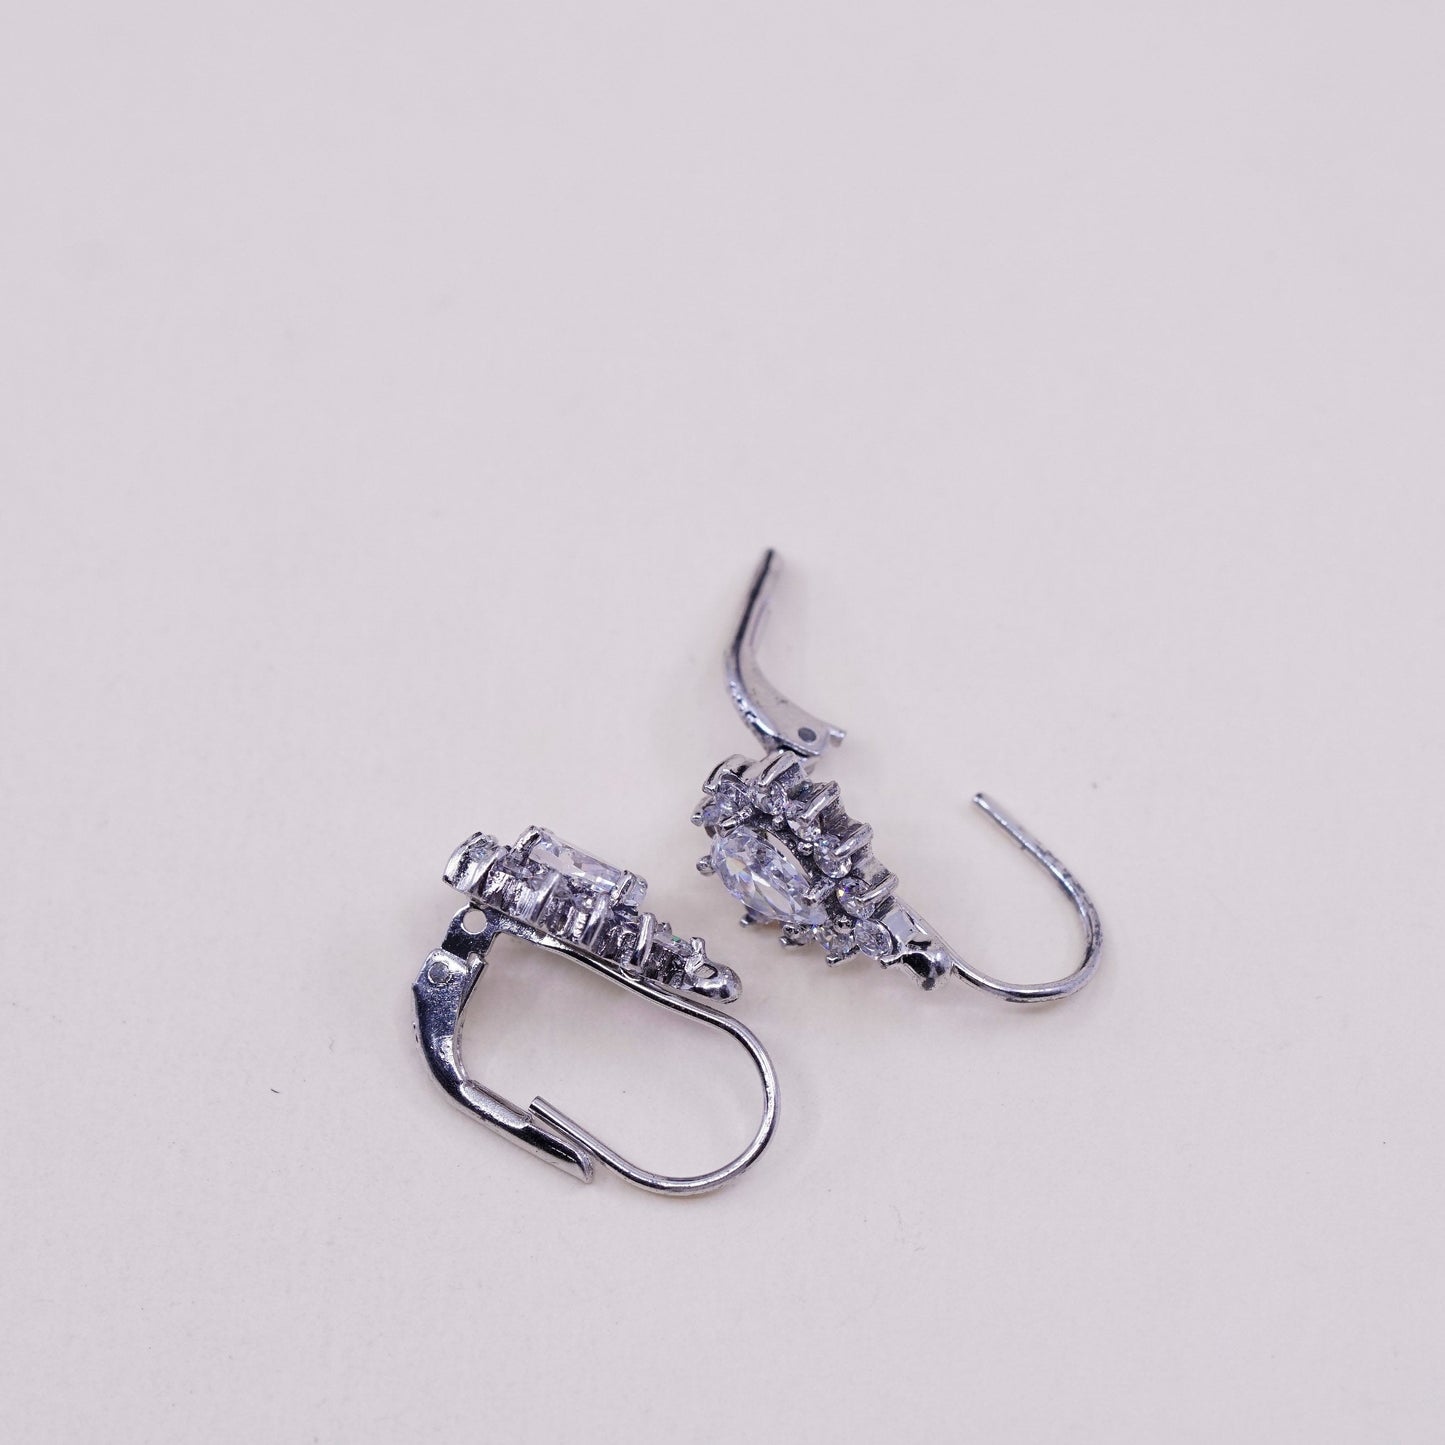 Vintage Sterling 925 silver handmade earrings, teardrop Cz dangles